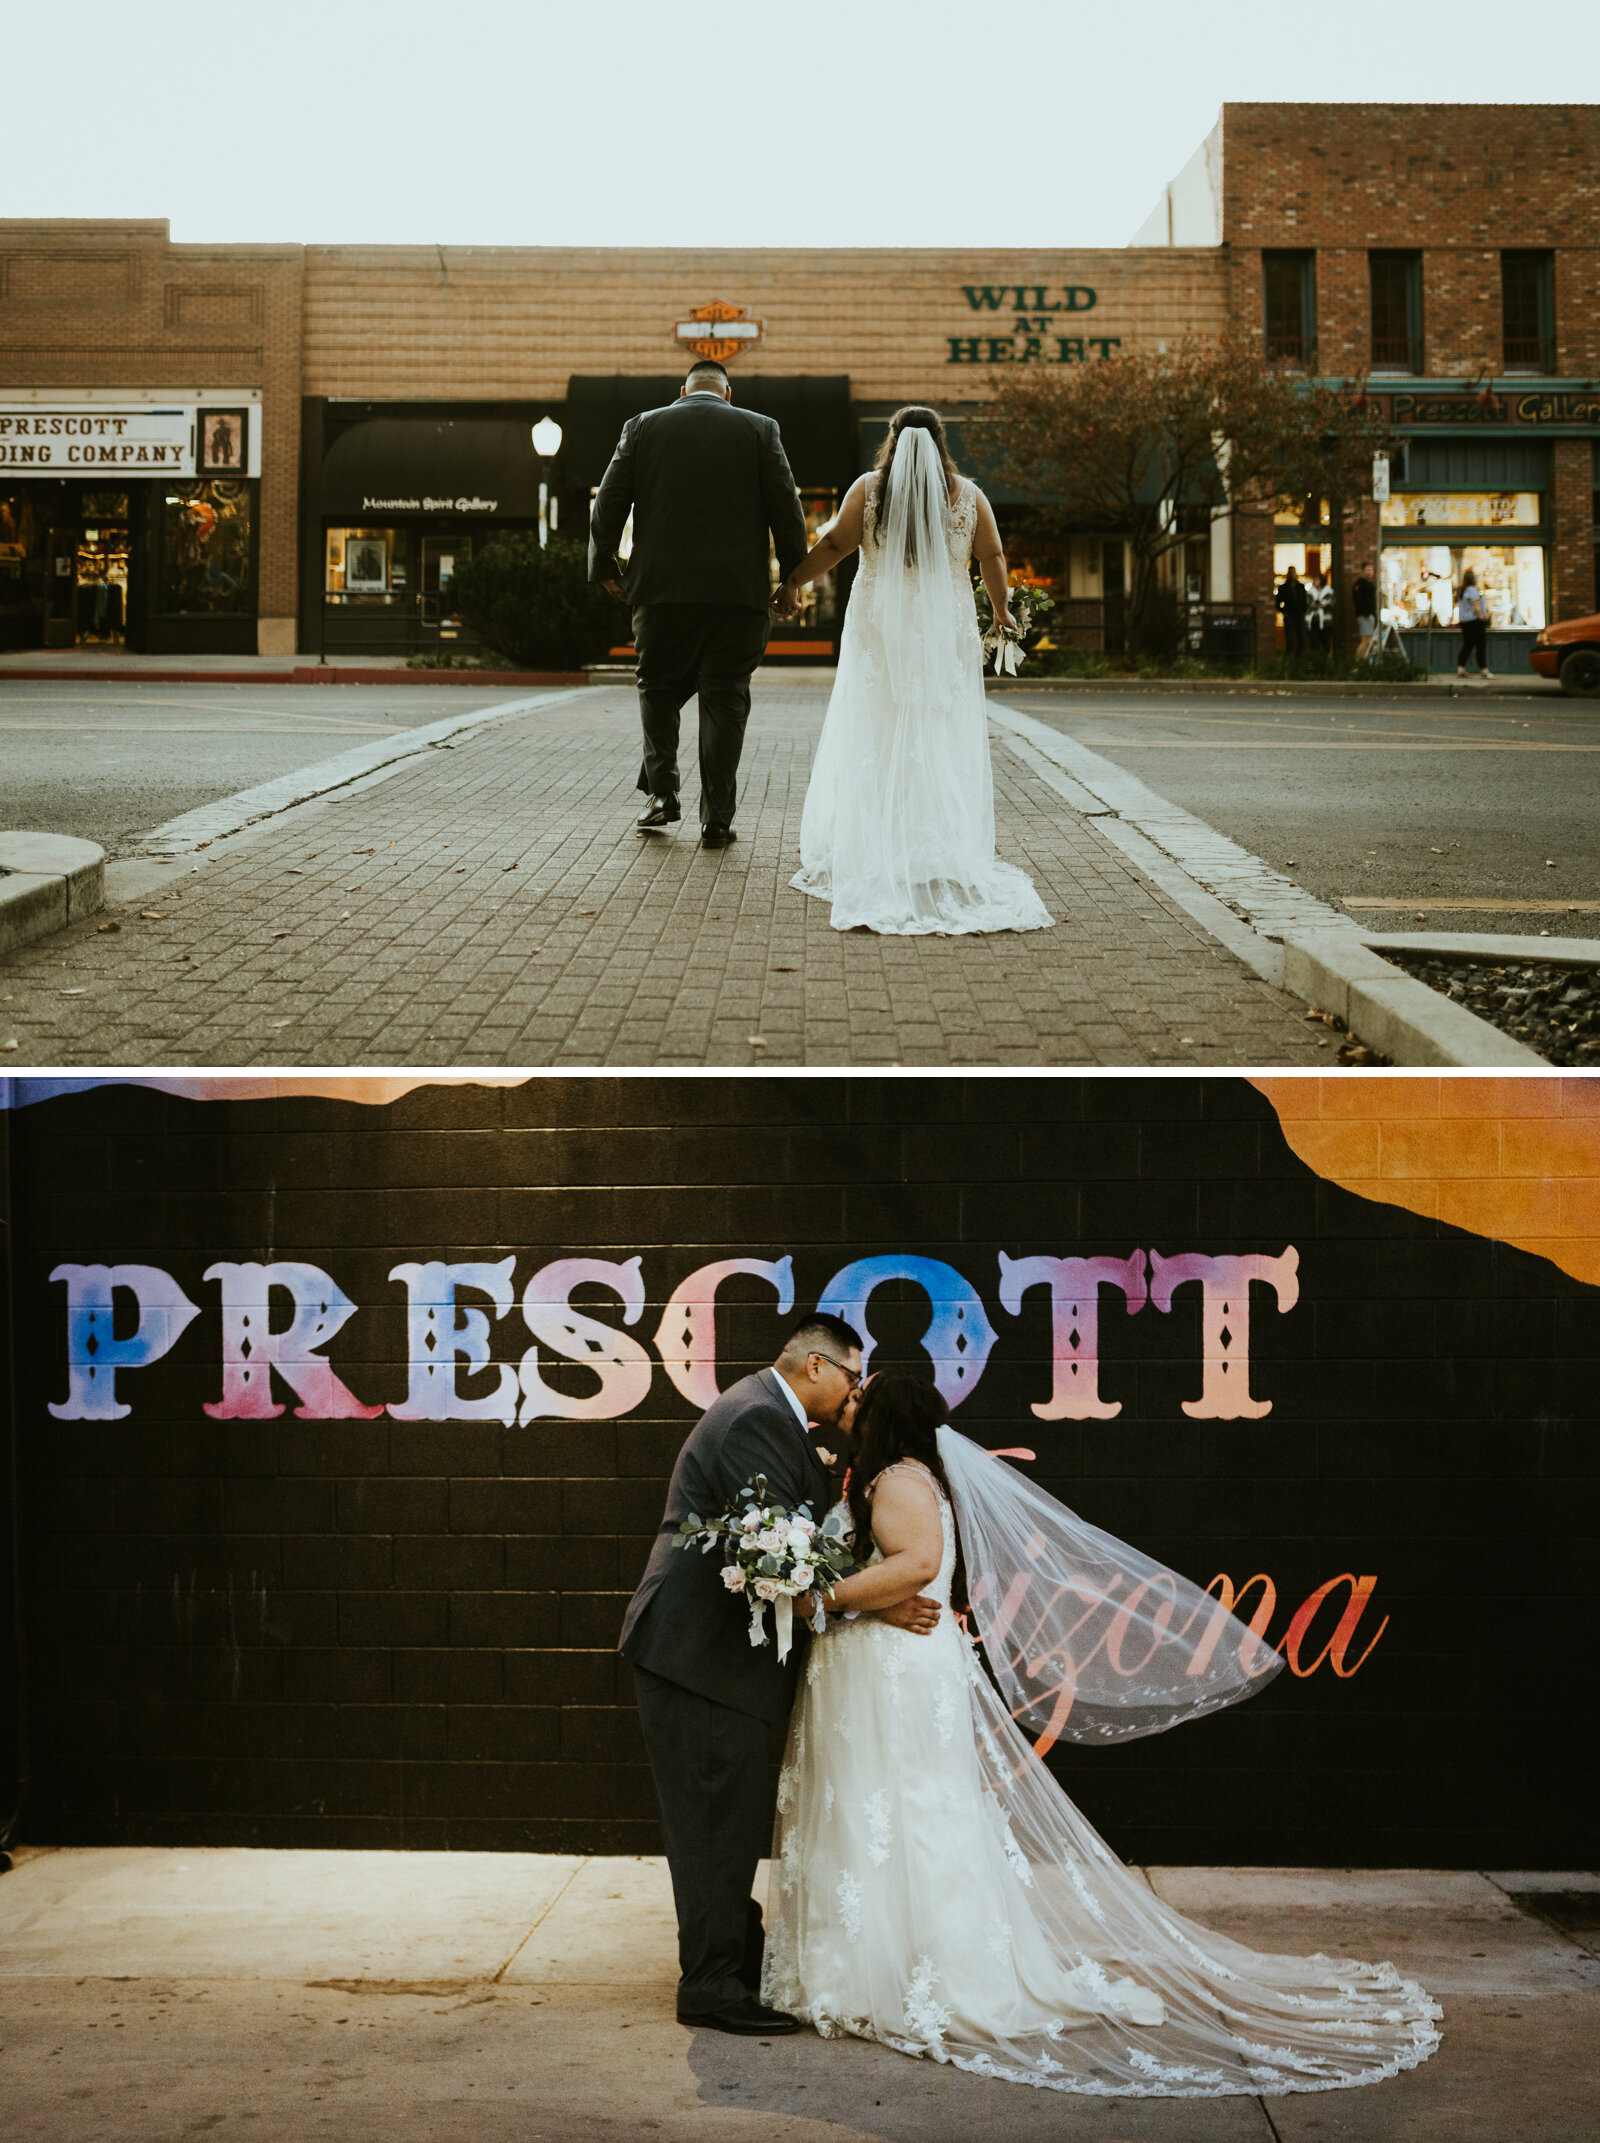 GRAND HIGHLAND HOTEL PRESCOTT ARIZONA WEDDING PHOTOGRAPHY DOWNTOWN PRESCOTT BRIDE AND GROOM.jpg